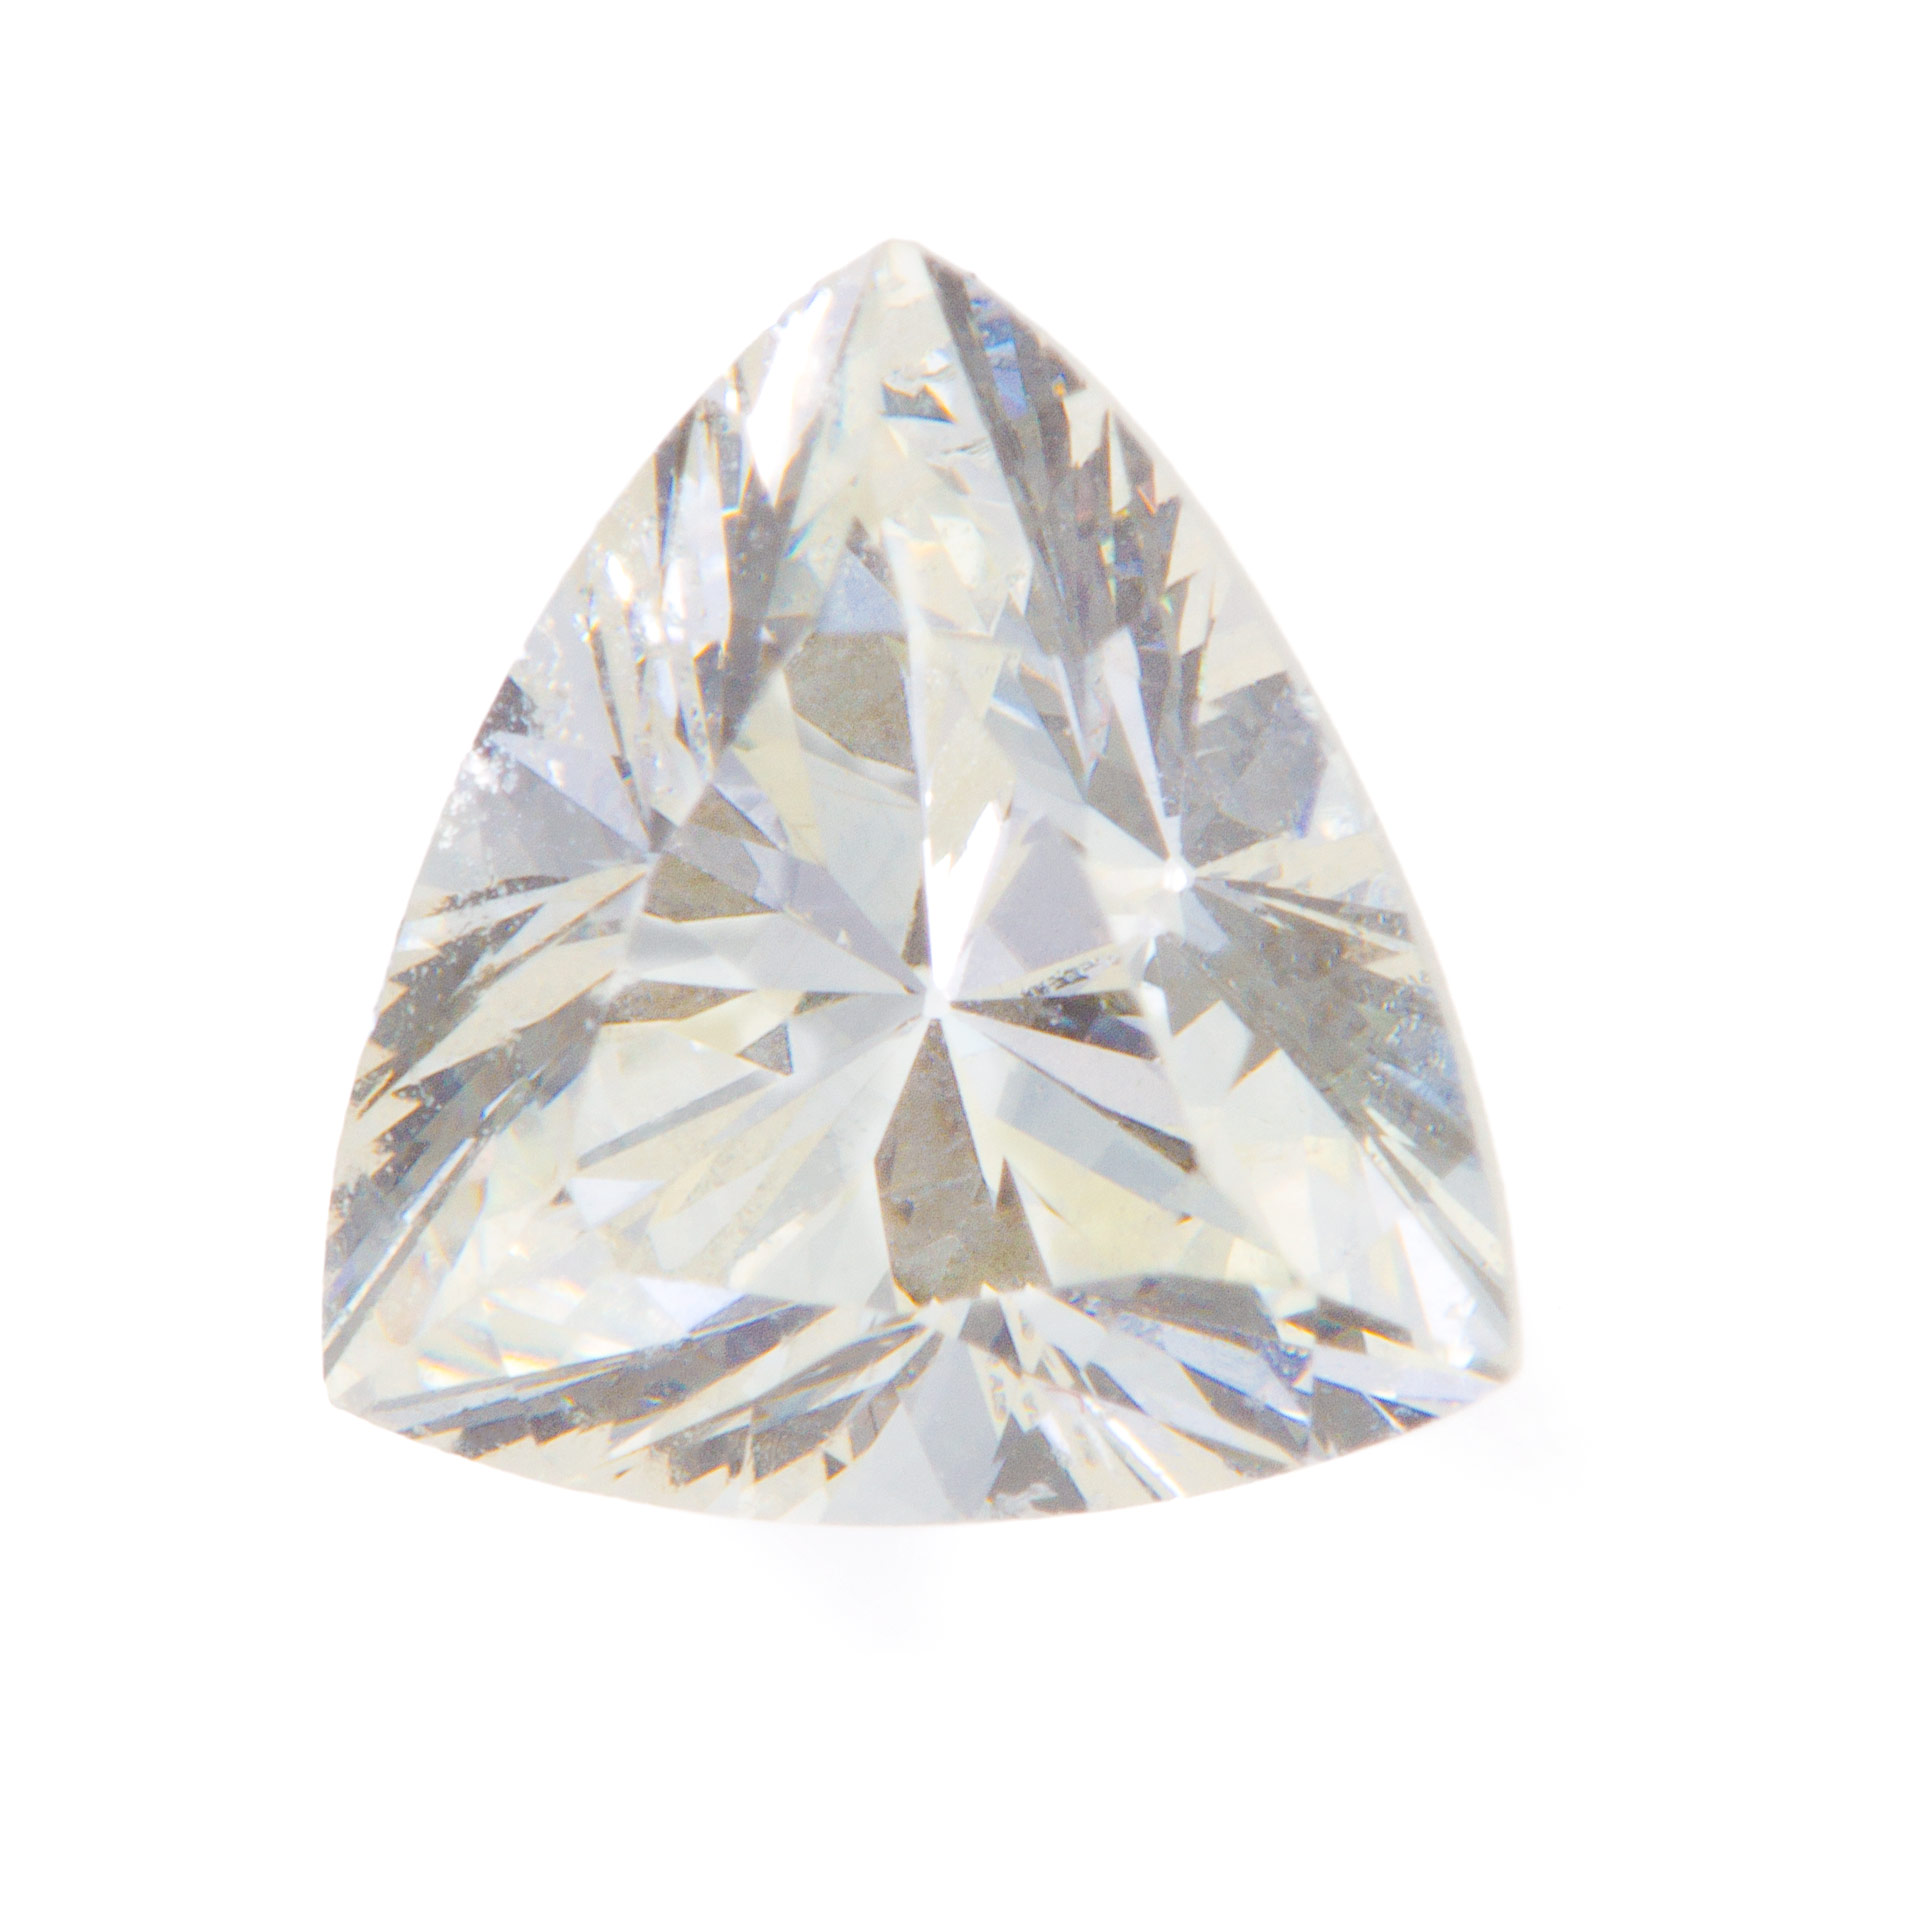 Triangle shaped diamond 0.54 ct (K color, VS1 clarity) image 1